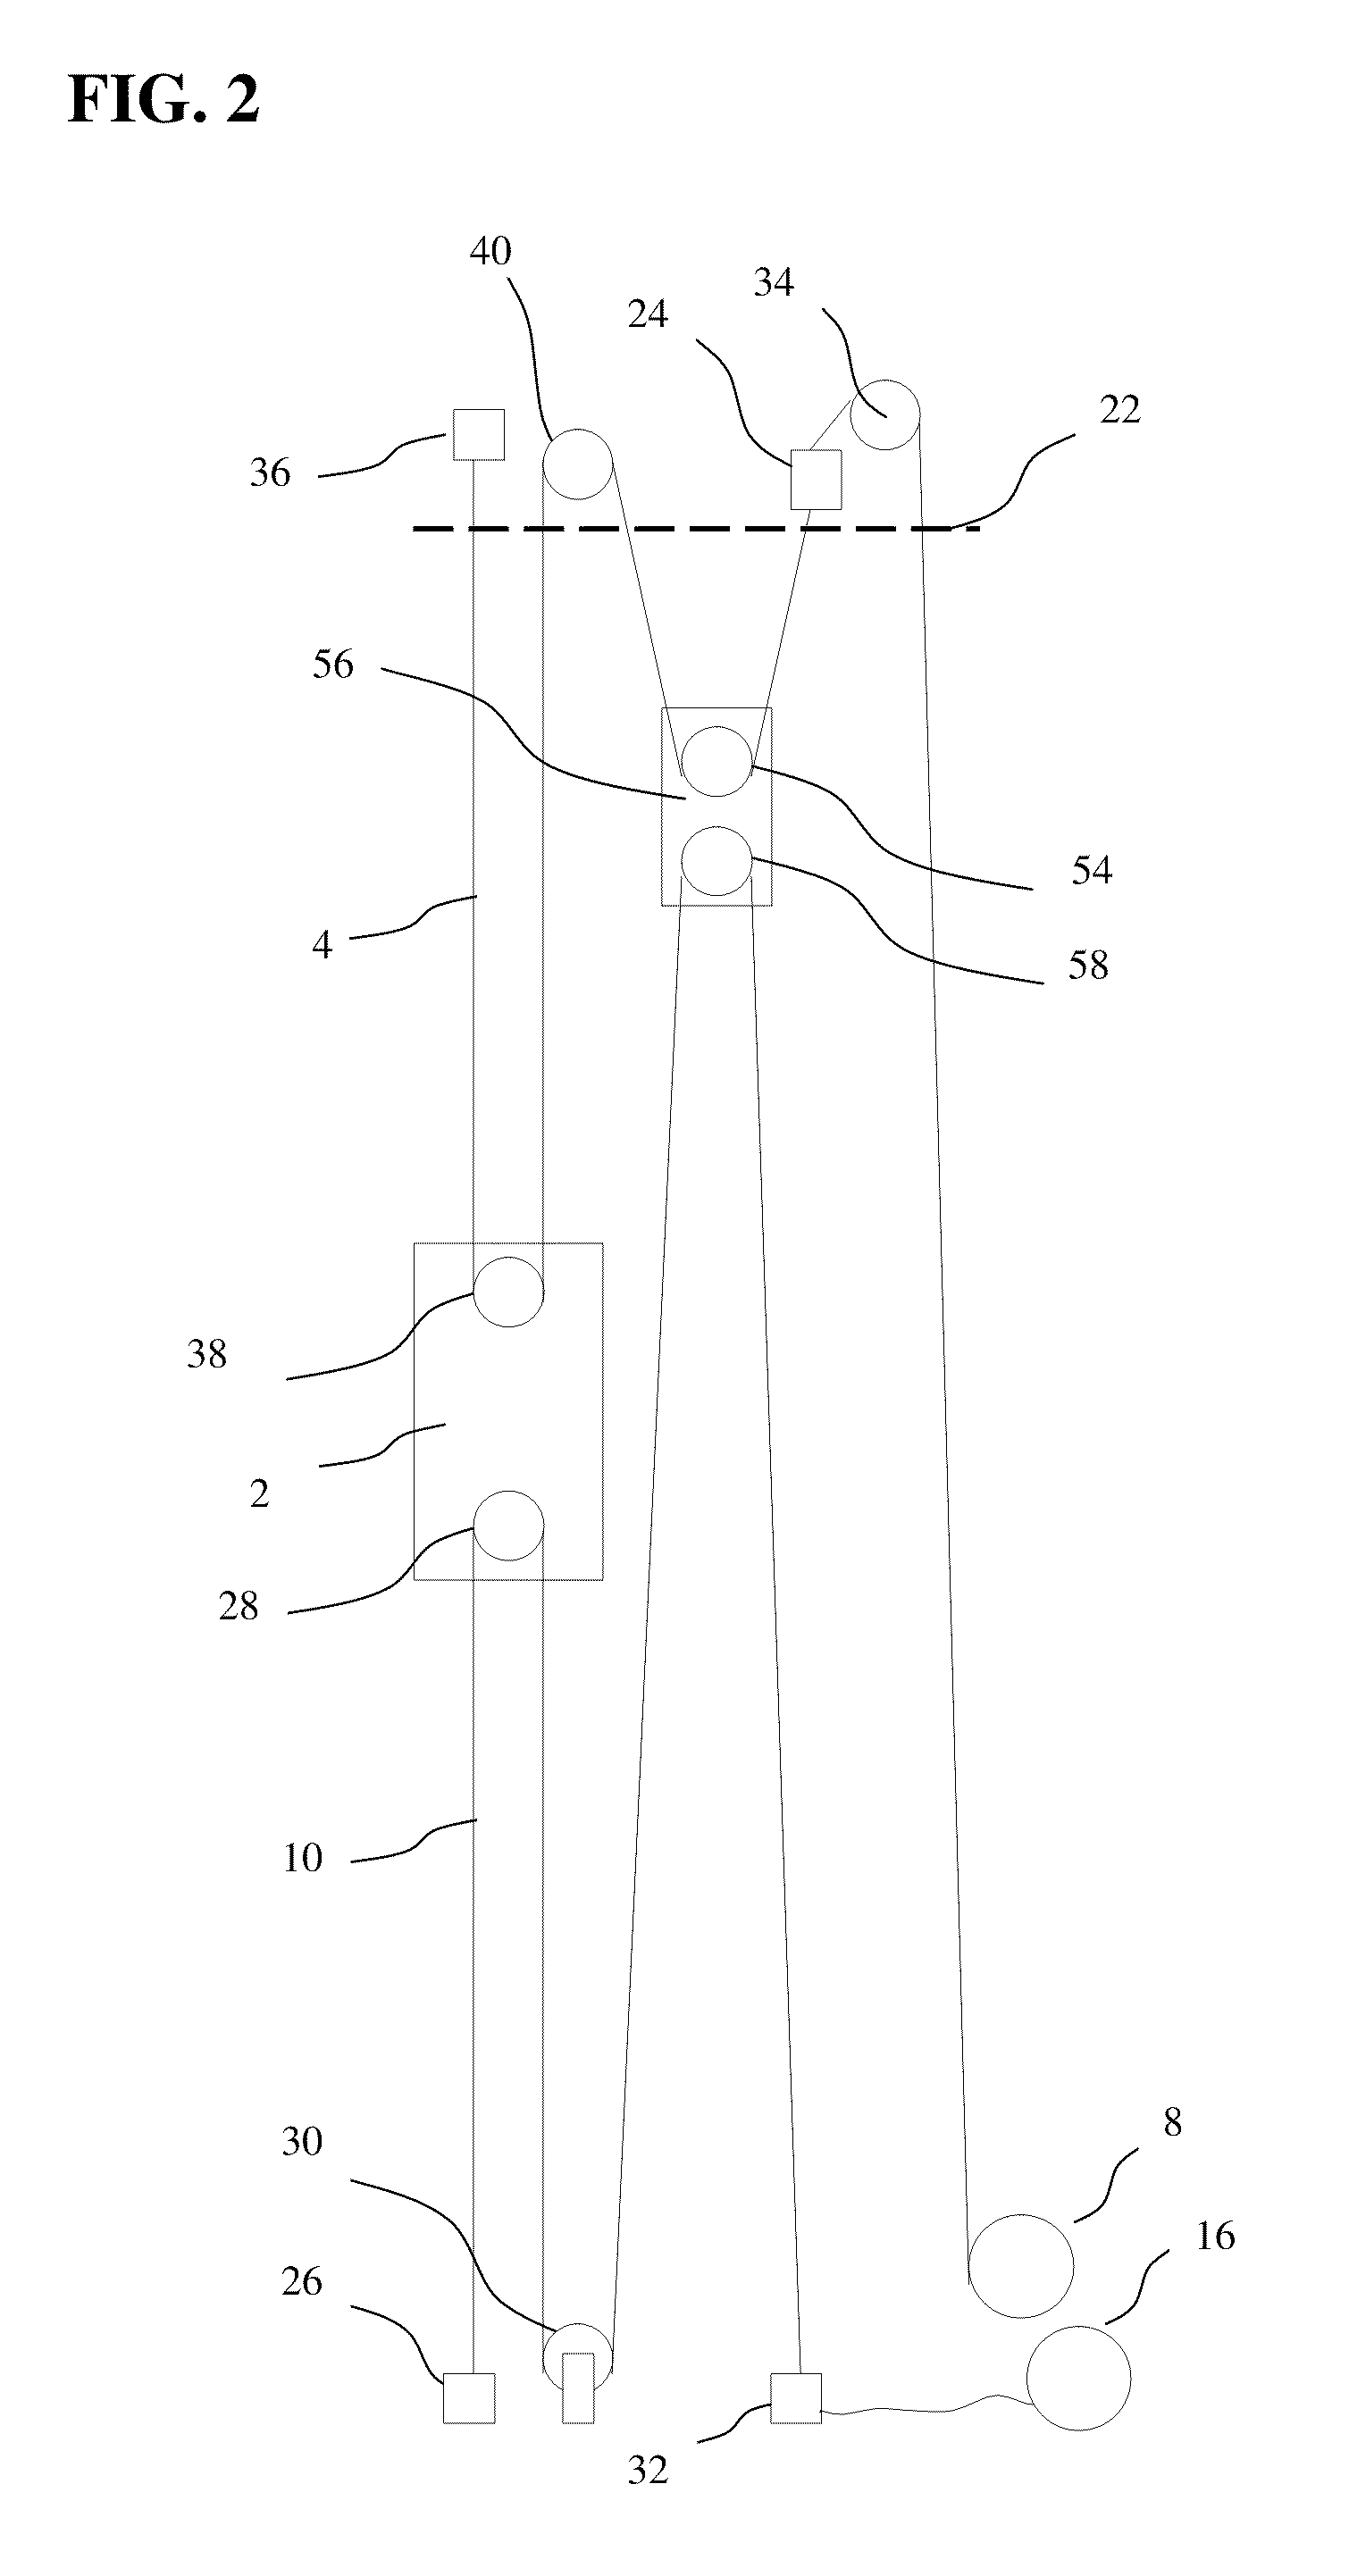 Elevator arrangement and method